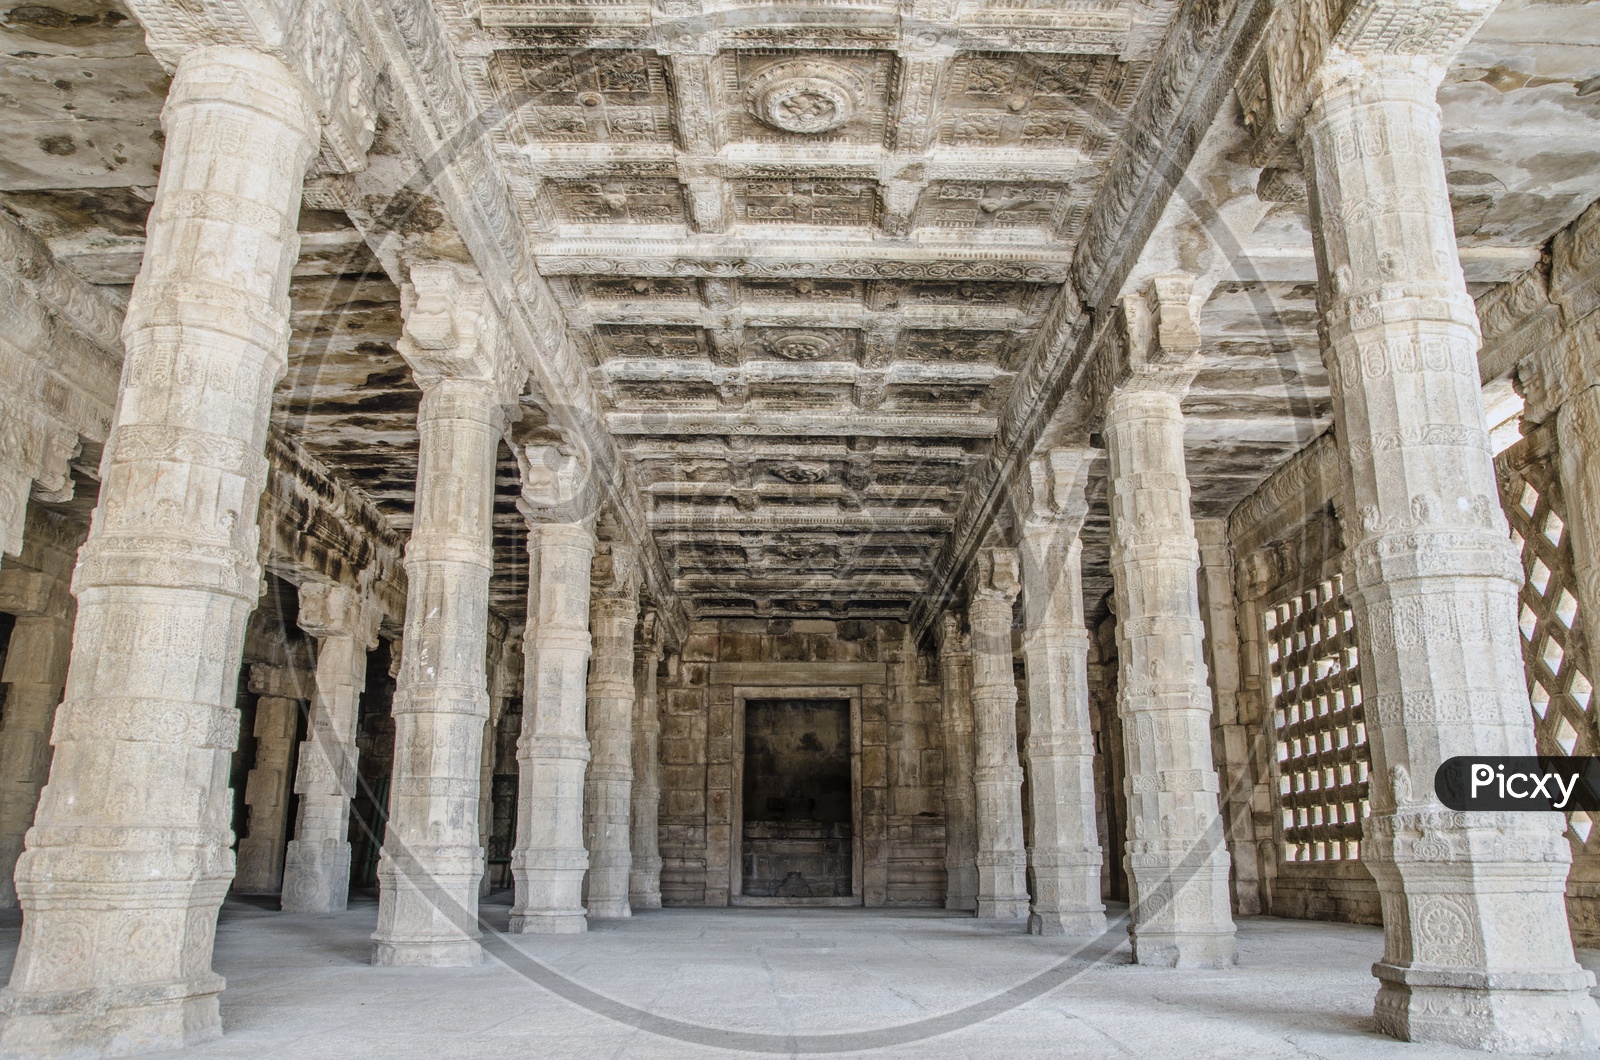 Columnar pillars of an ancient architecture